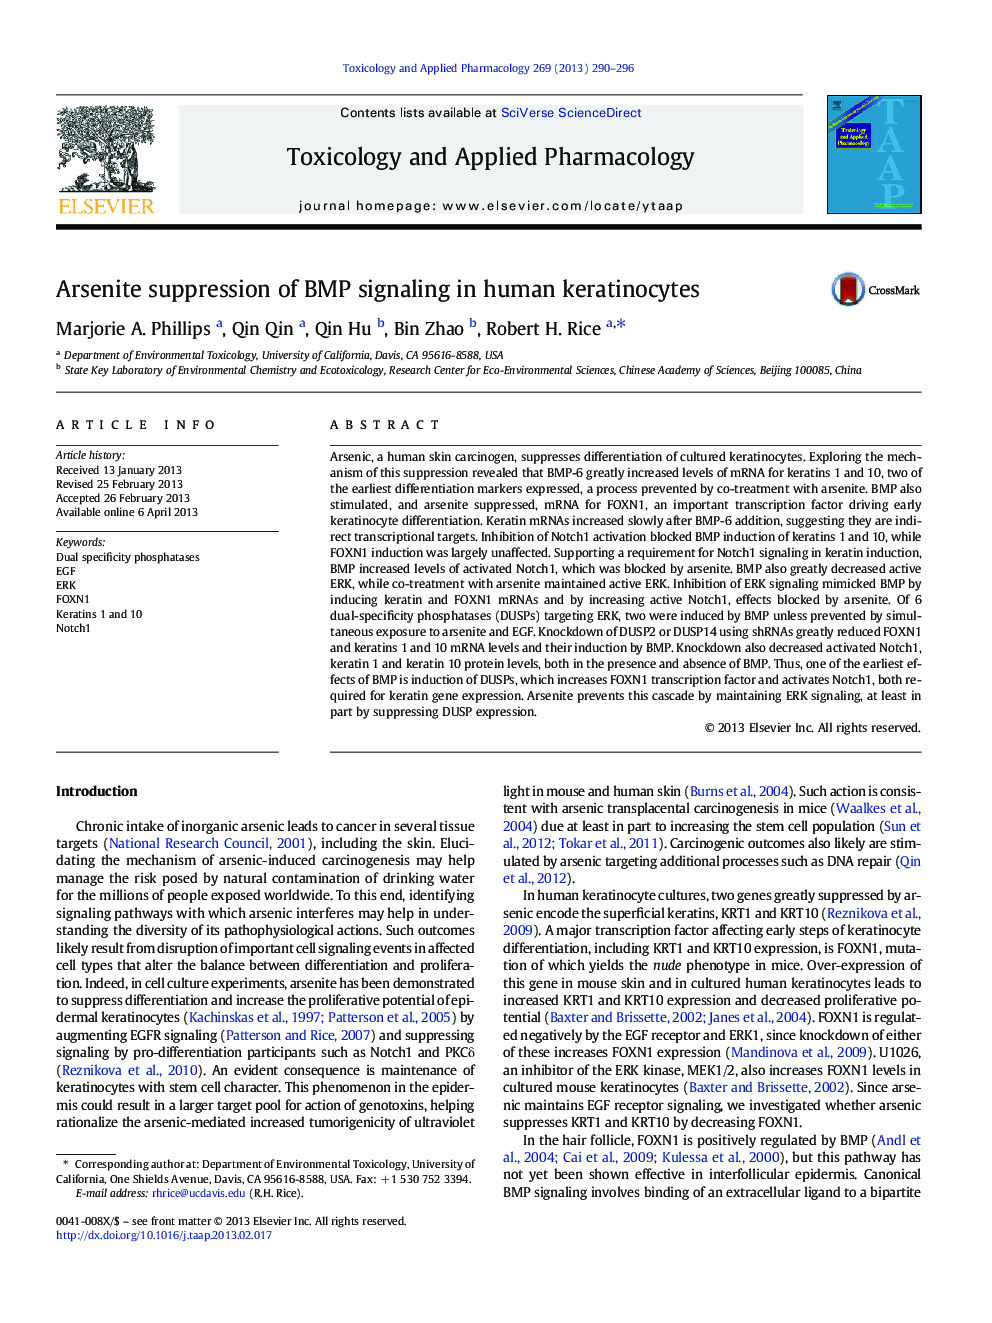 Arsenite suppression of BMP signaling in human keratinocytes